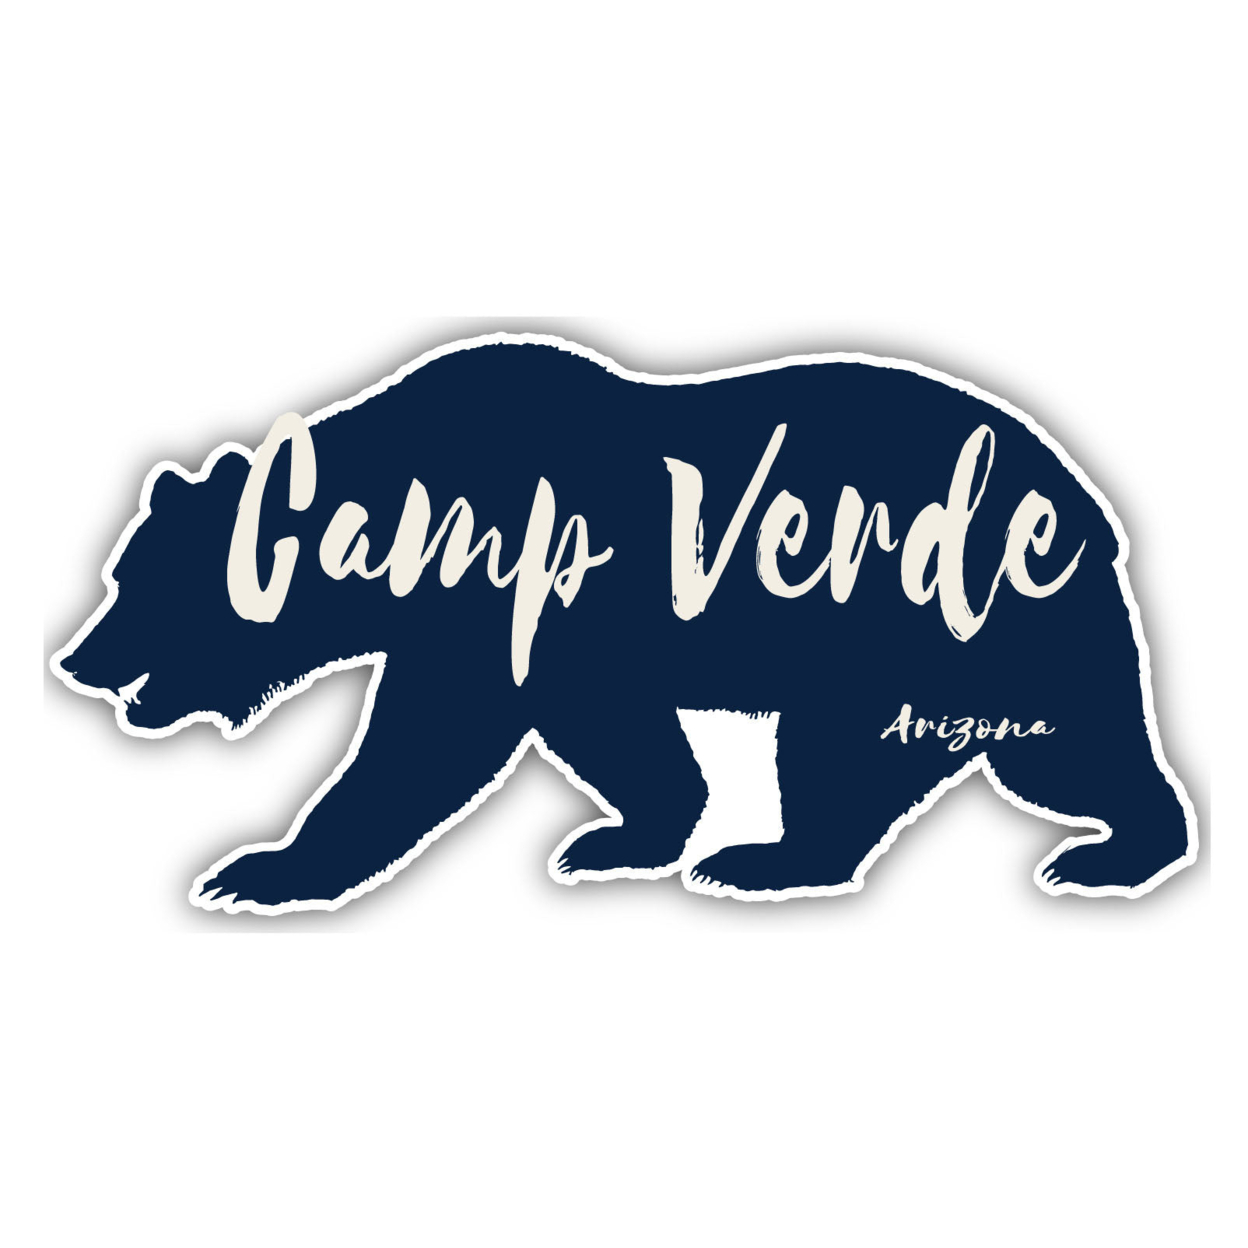 Camp Verde Arizona Souvenir Decorative Stickers (Choose Theme And Size) - Single Unit, 10-Inch, Camp Life